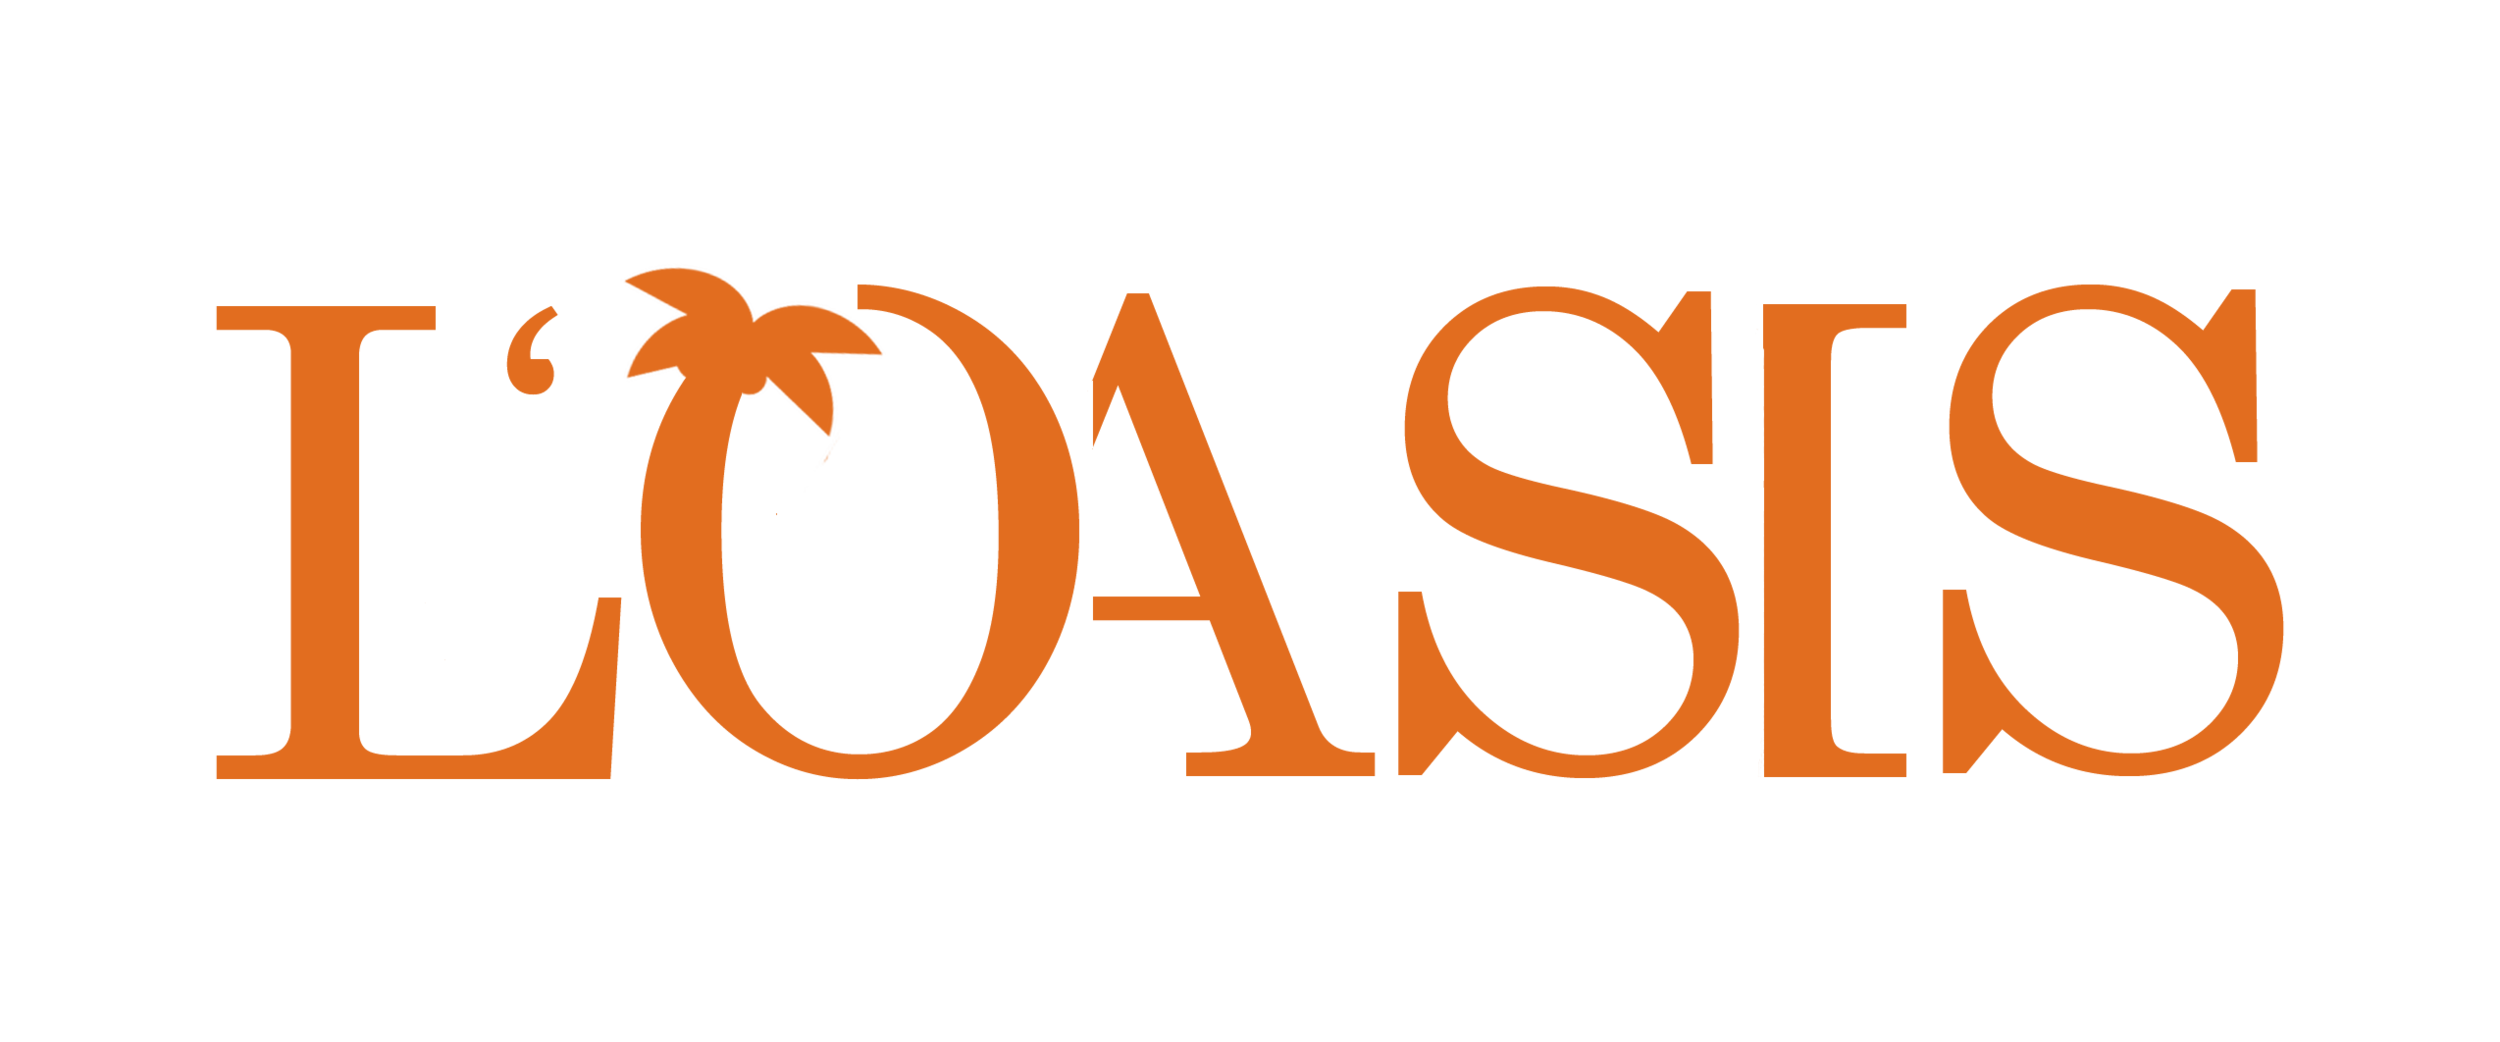 L'oasis